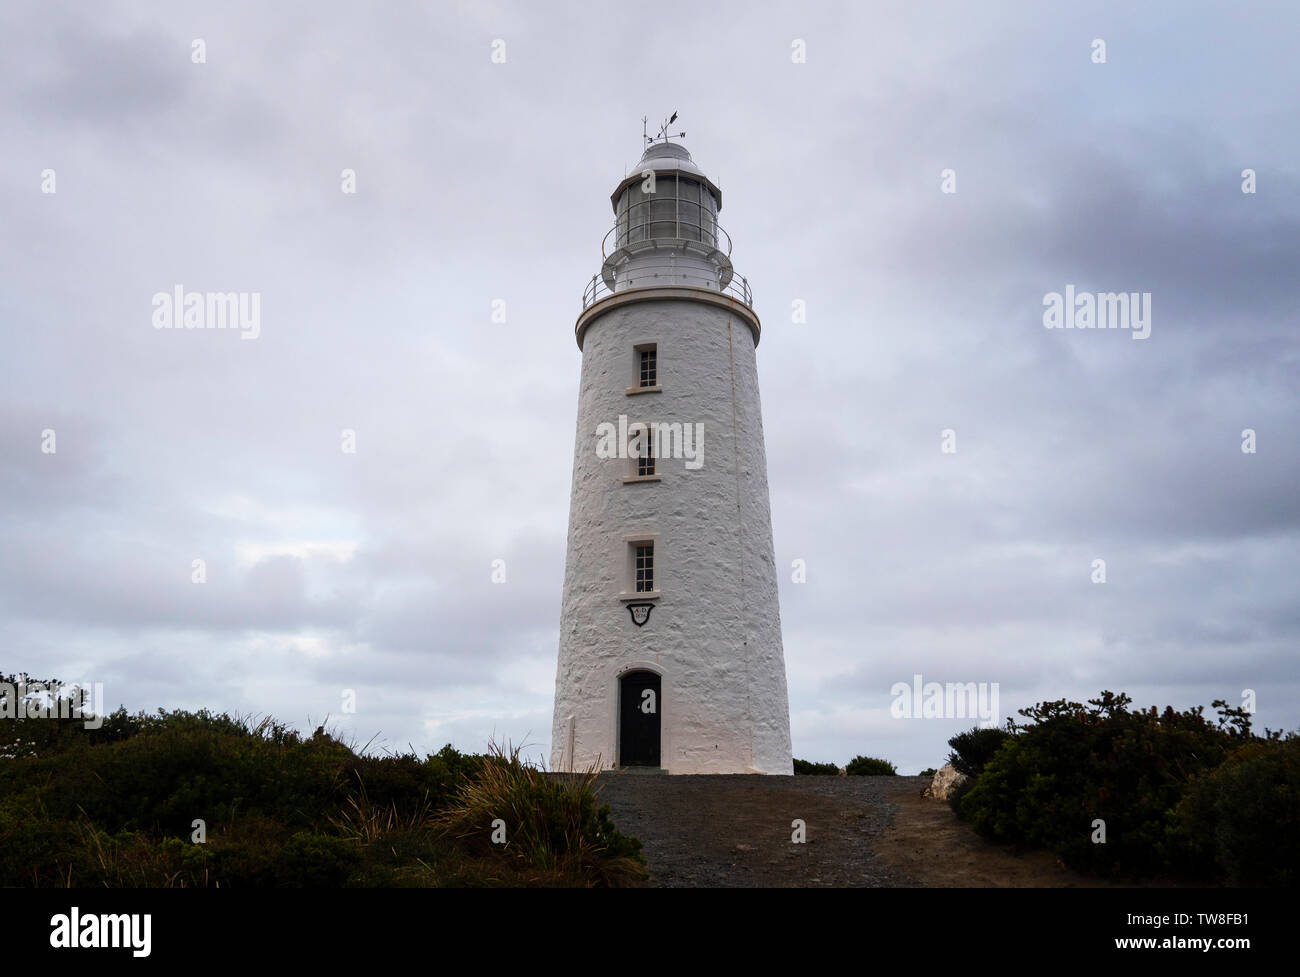 Cape Bruny Lighthouse  on Bruny Island, Tasmania, Australia travel tourism destination.   The lighthouse was built in 1836. Stock Photo